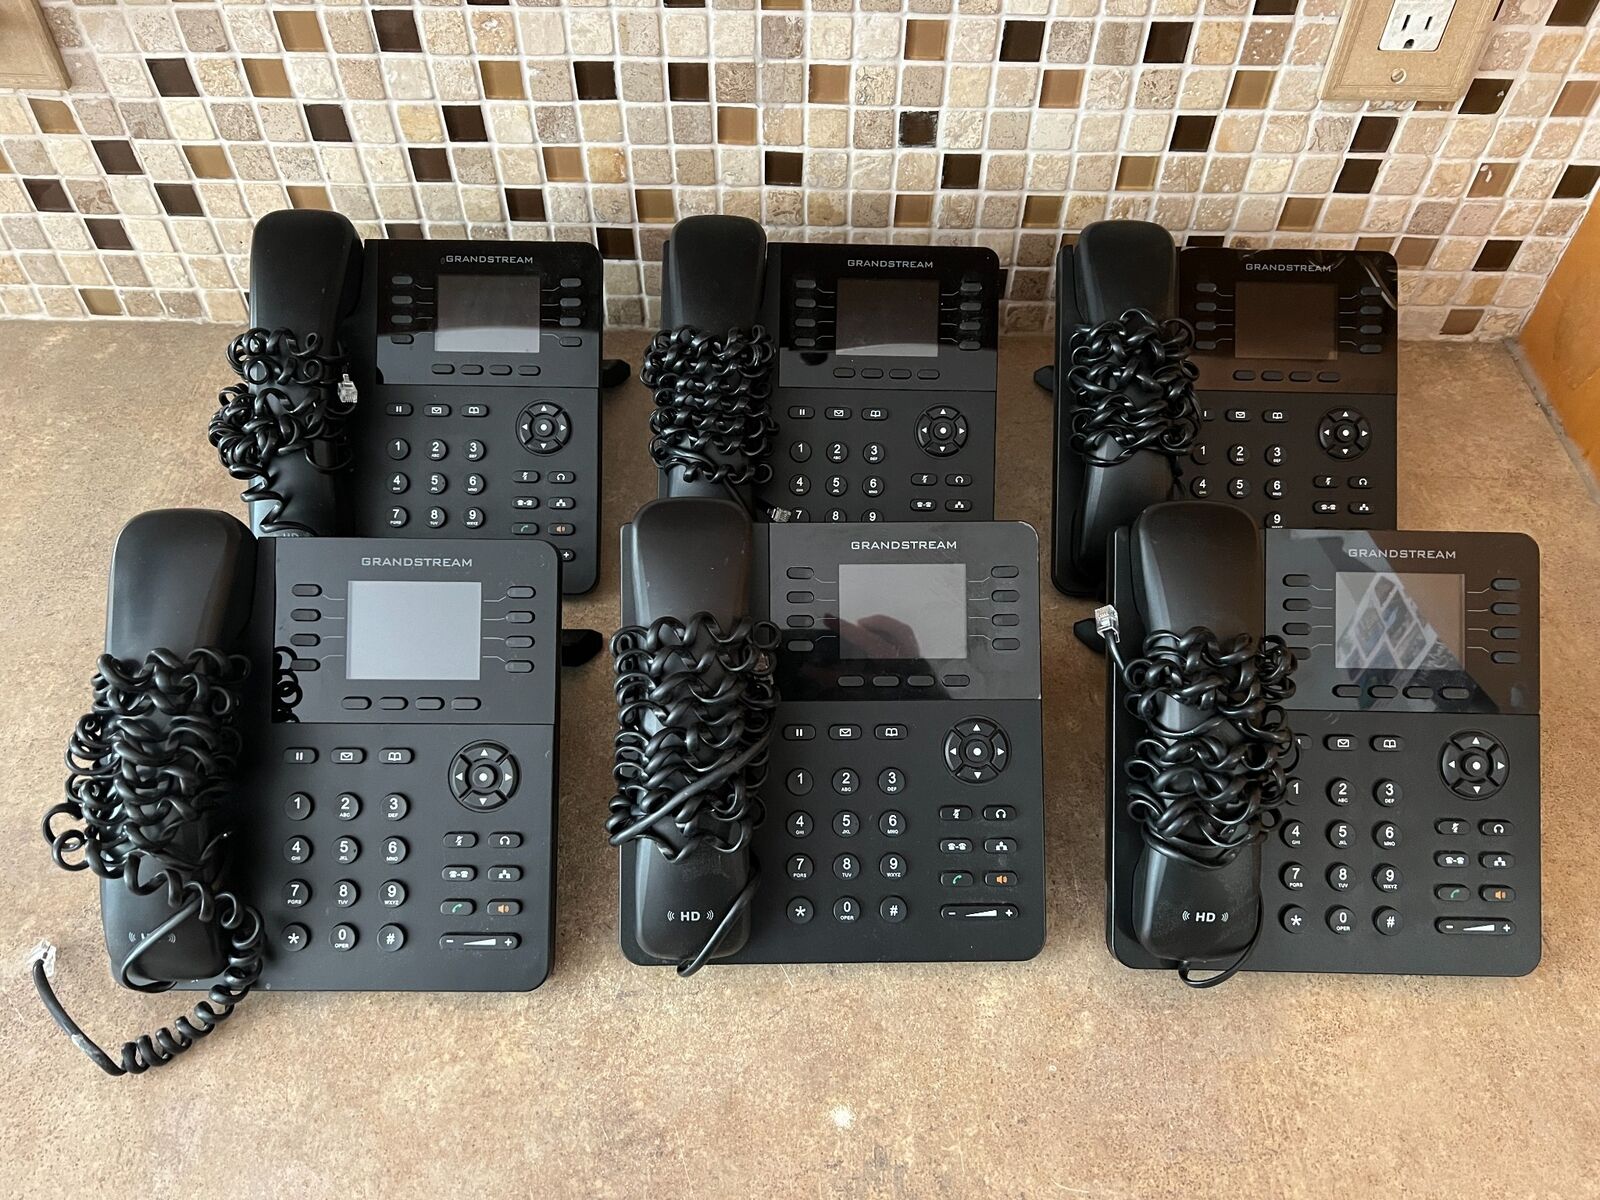 LOT OF 6 Grandstream GXP2135 8 Lines Bluetooth Enterprise VoIP Phone URVF-5w